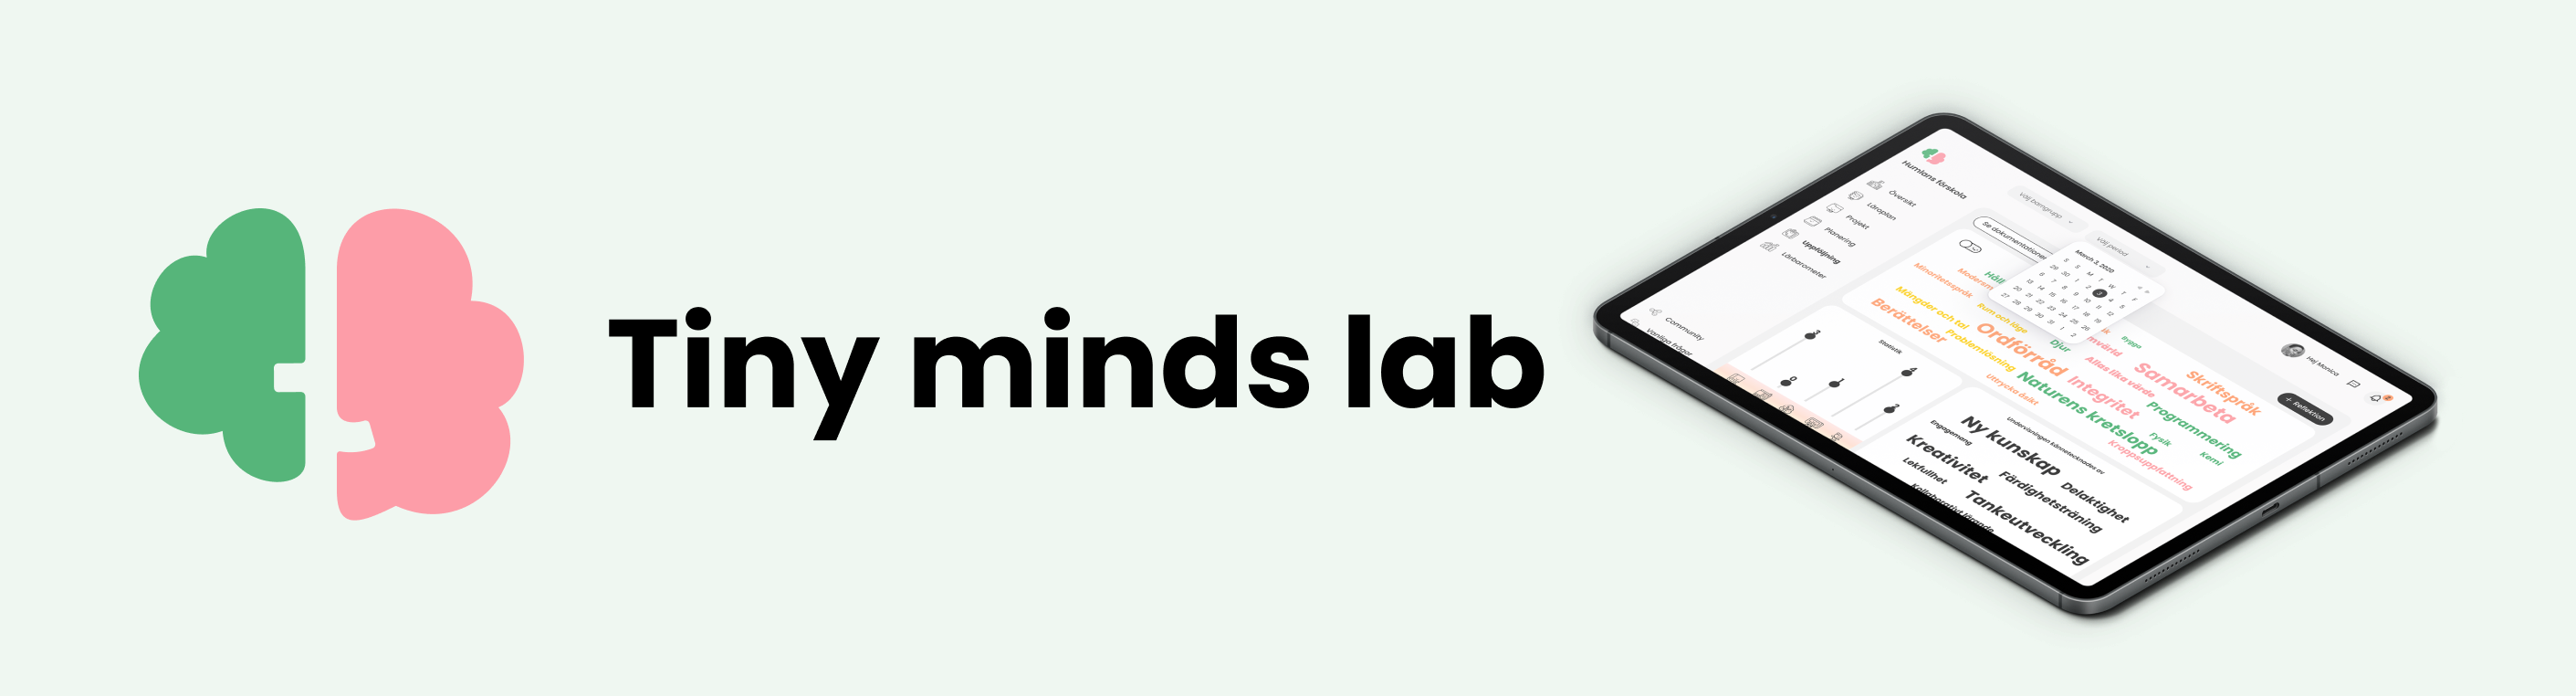 Tiny minds lab